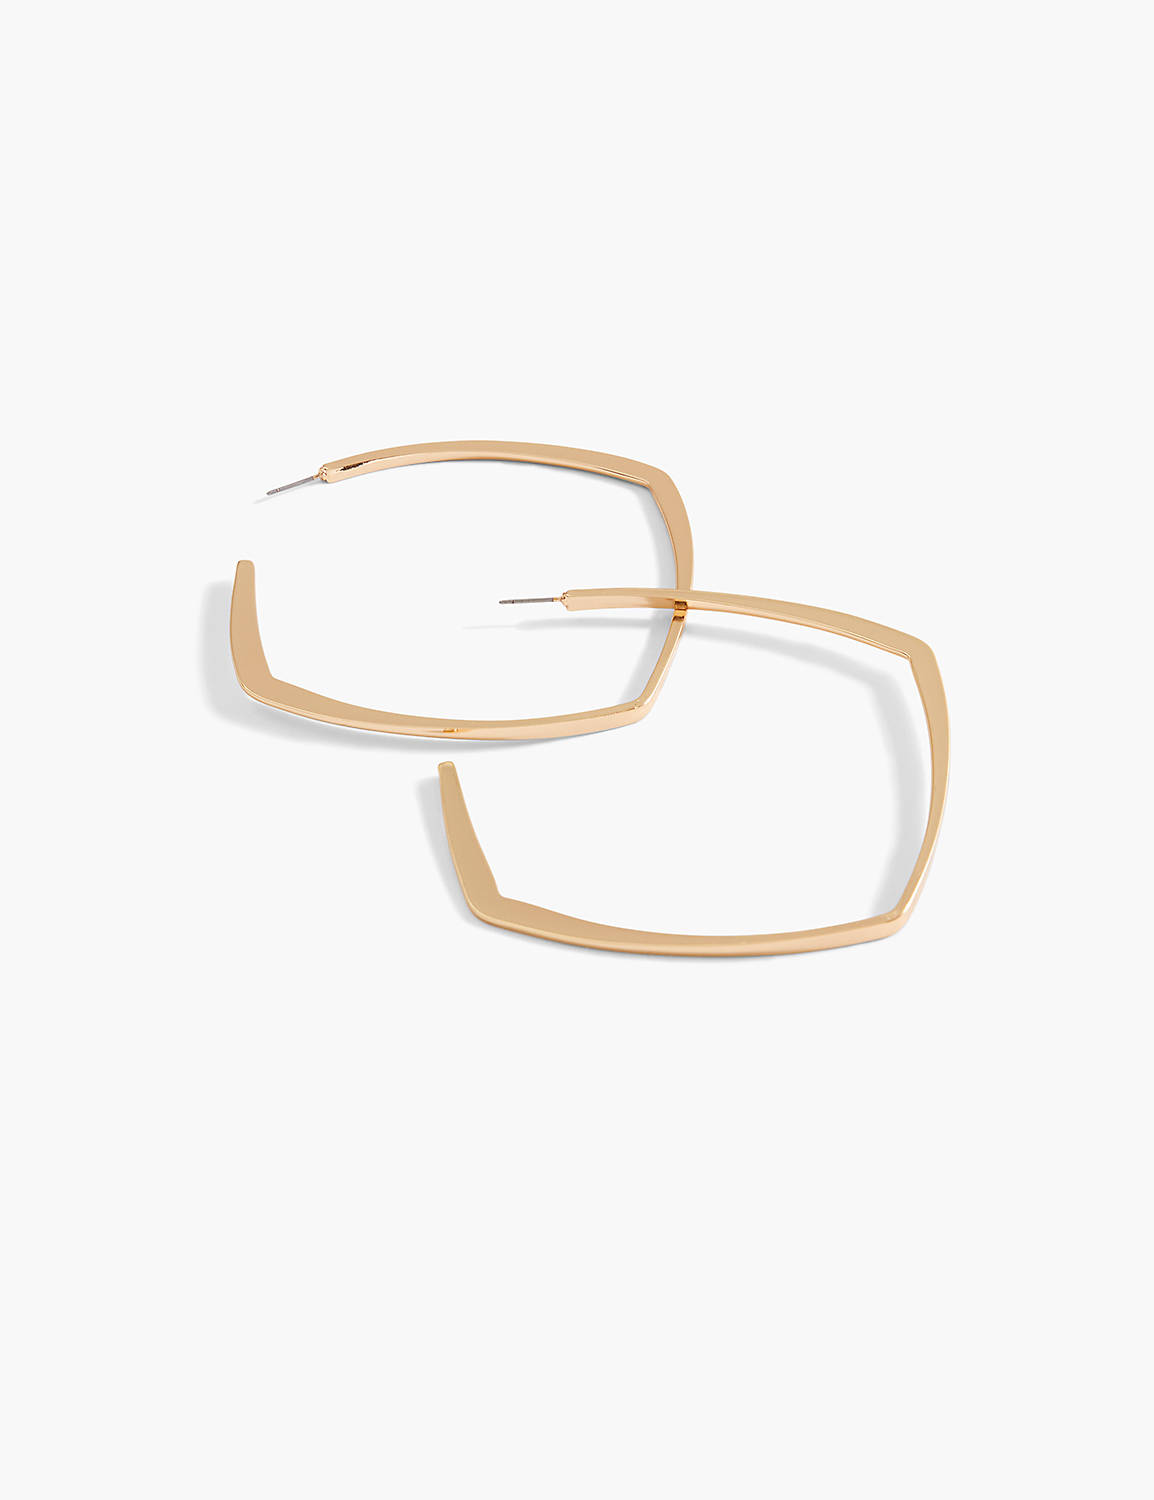 2.5" Flat Square Hoop Earrings Product Image 1